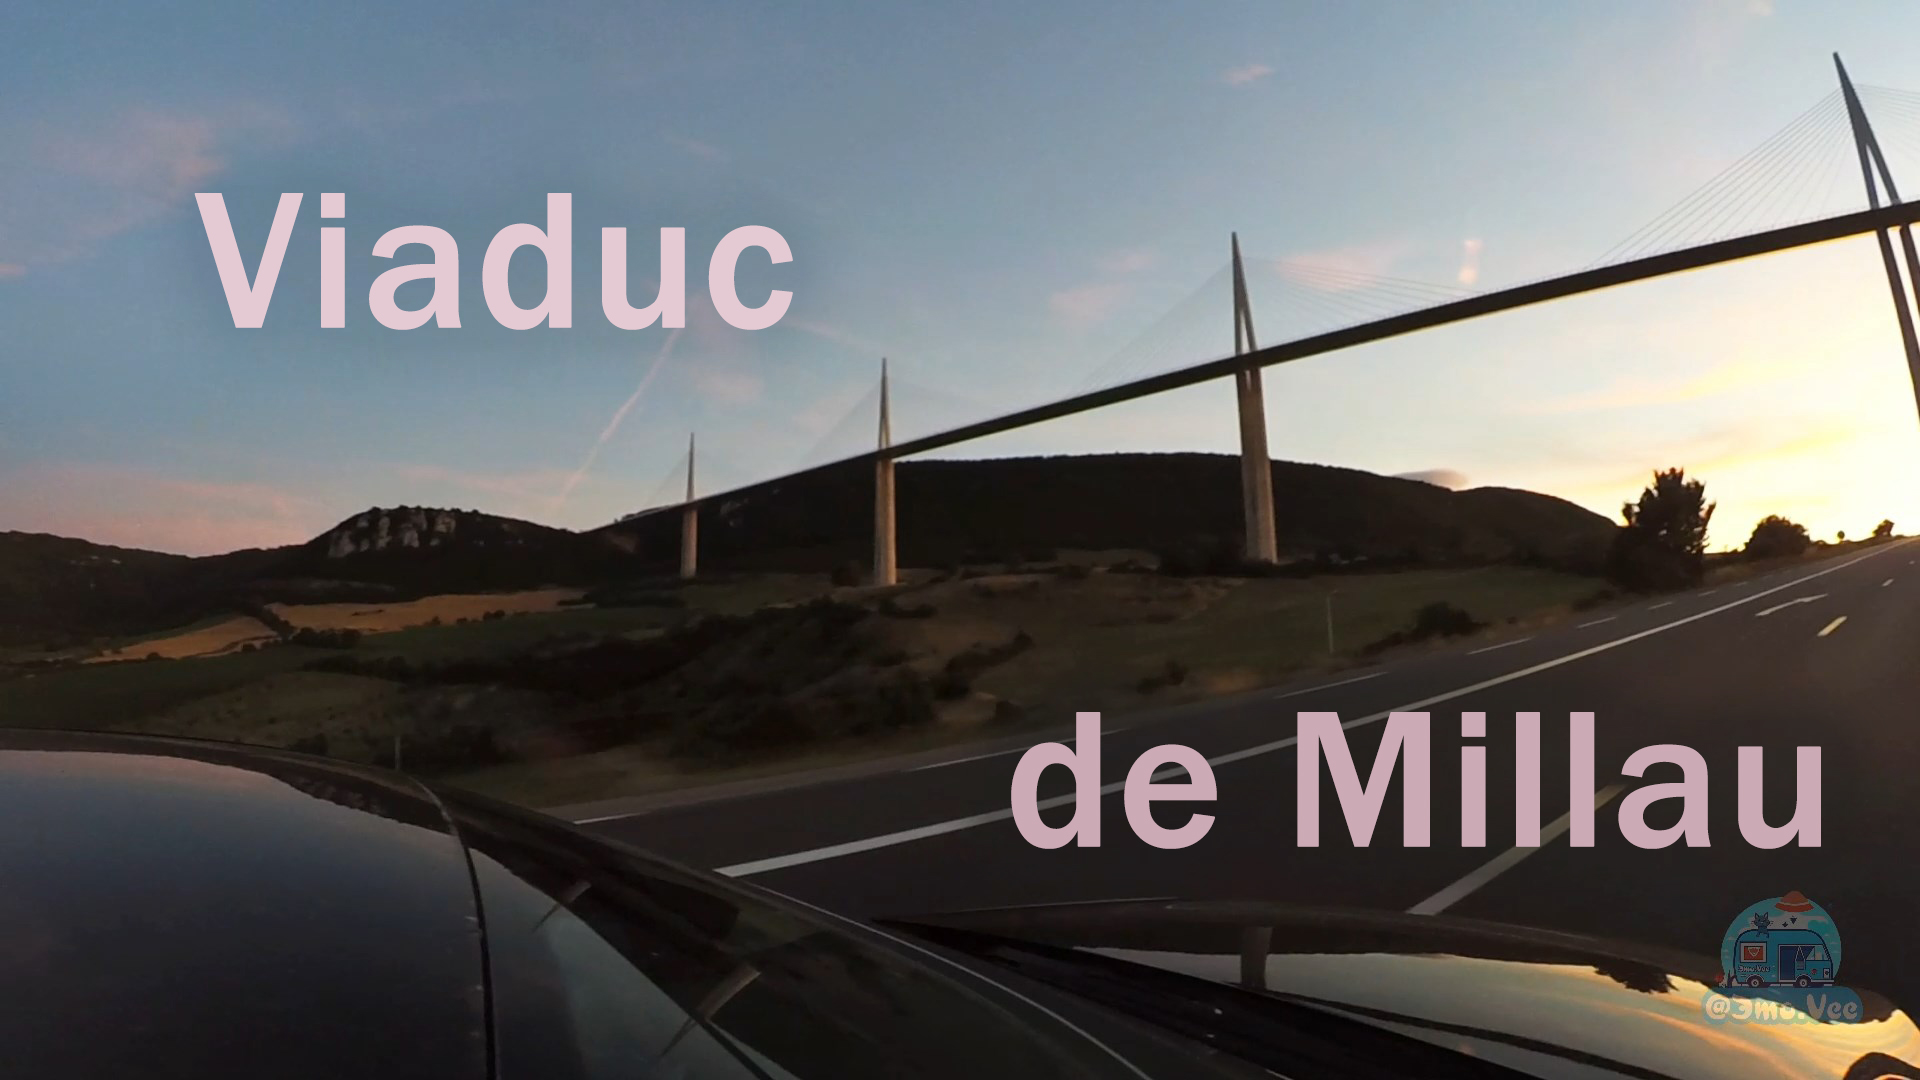 Виадук Мийо, Франция, 2016 / Le Viaduc de Millau, France, 2016